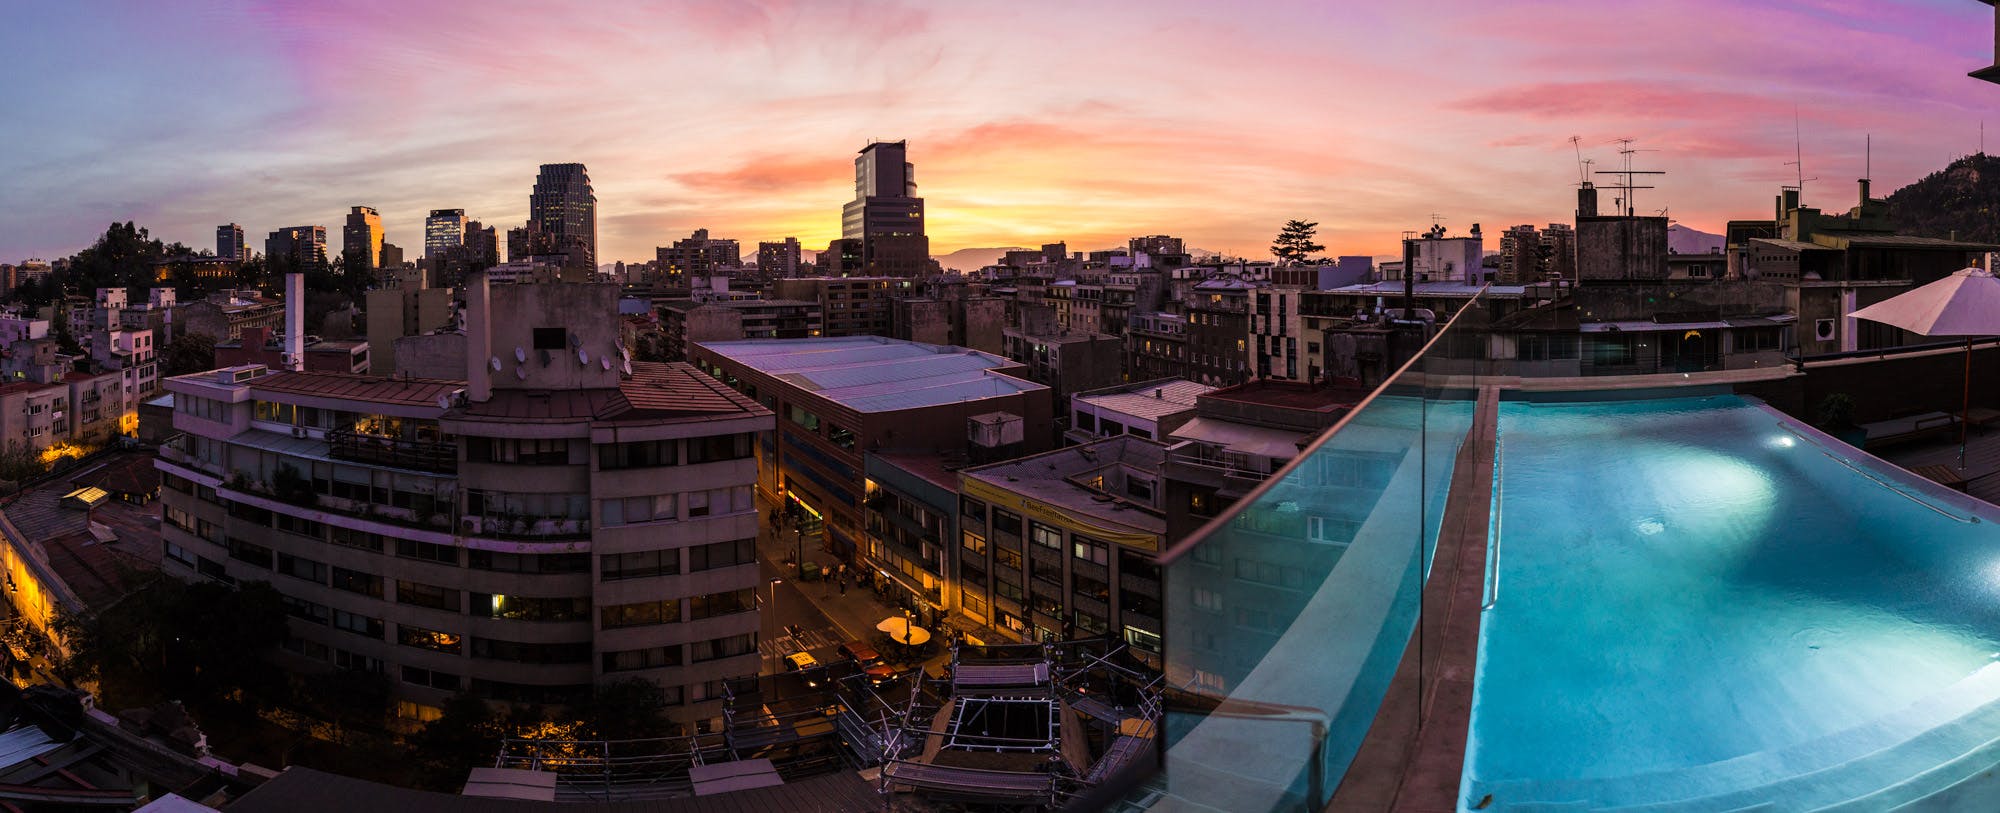 3 of the Best Hotels in Santiago